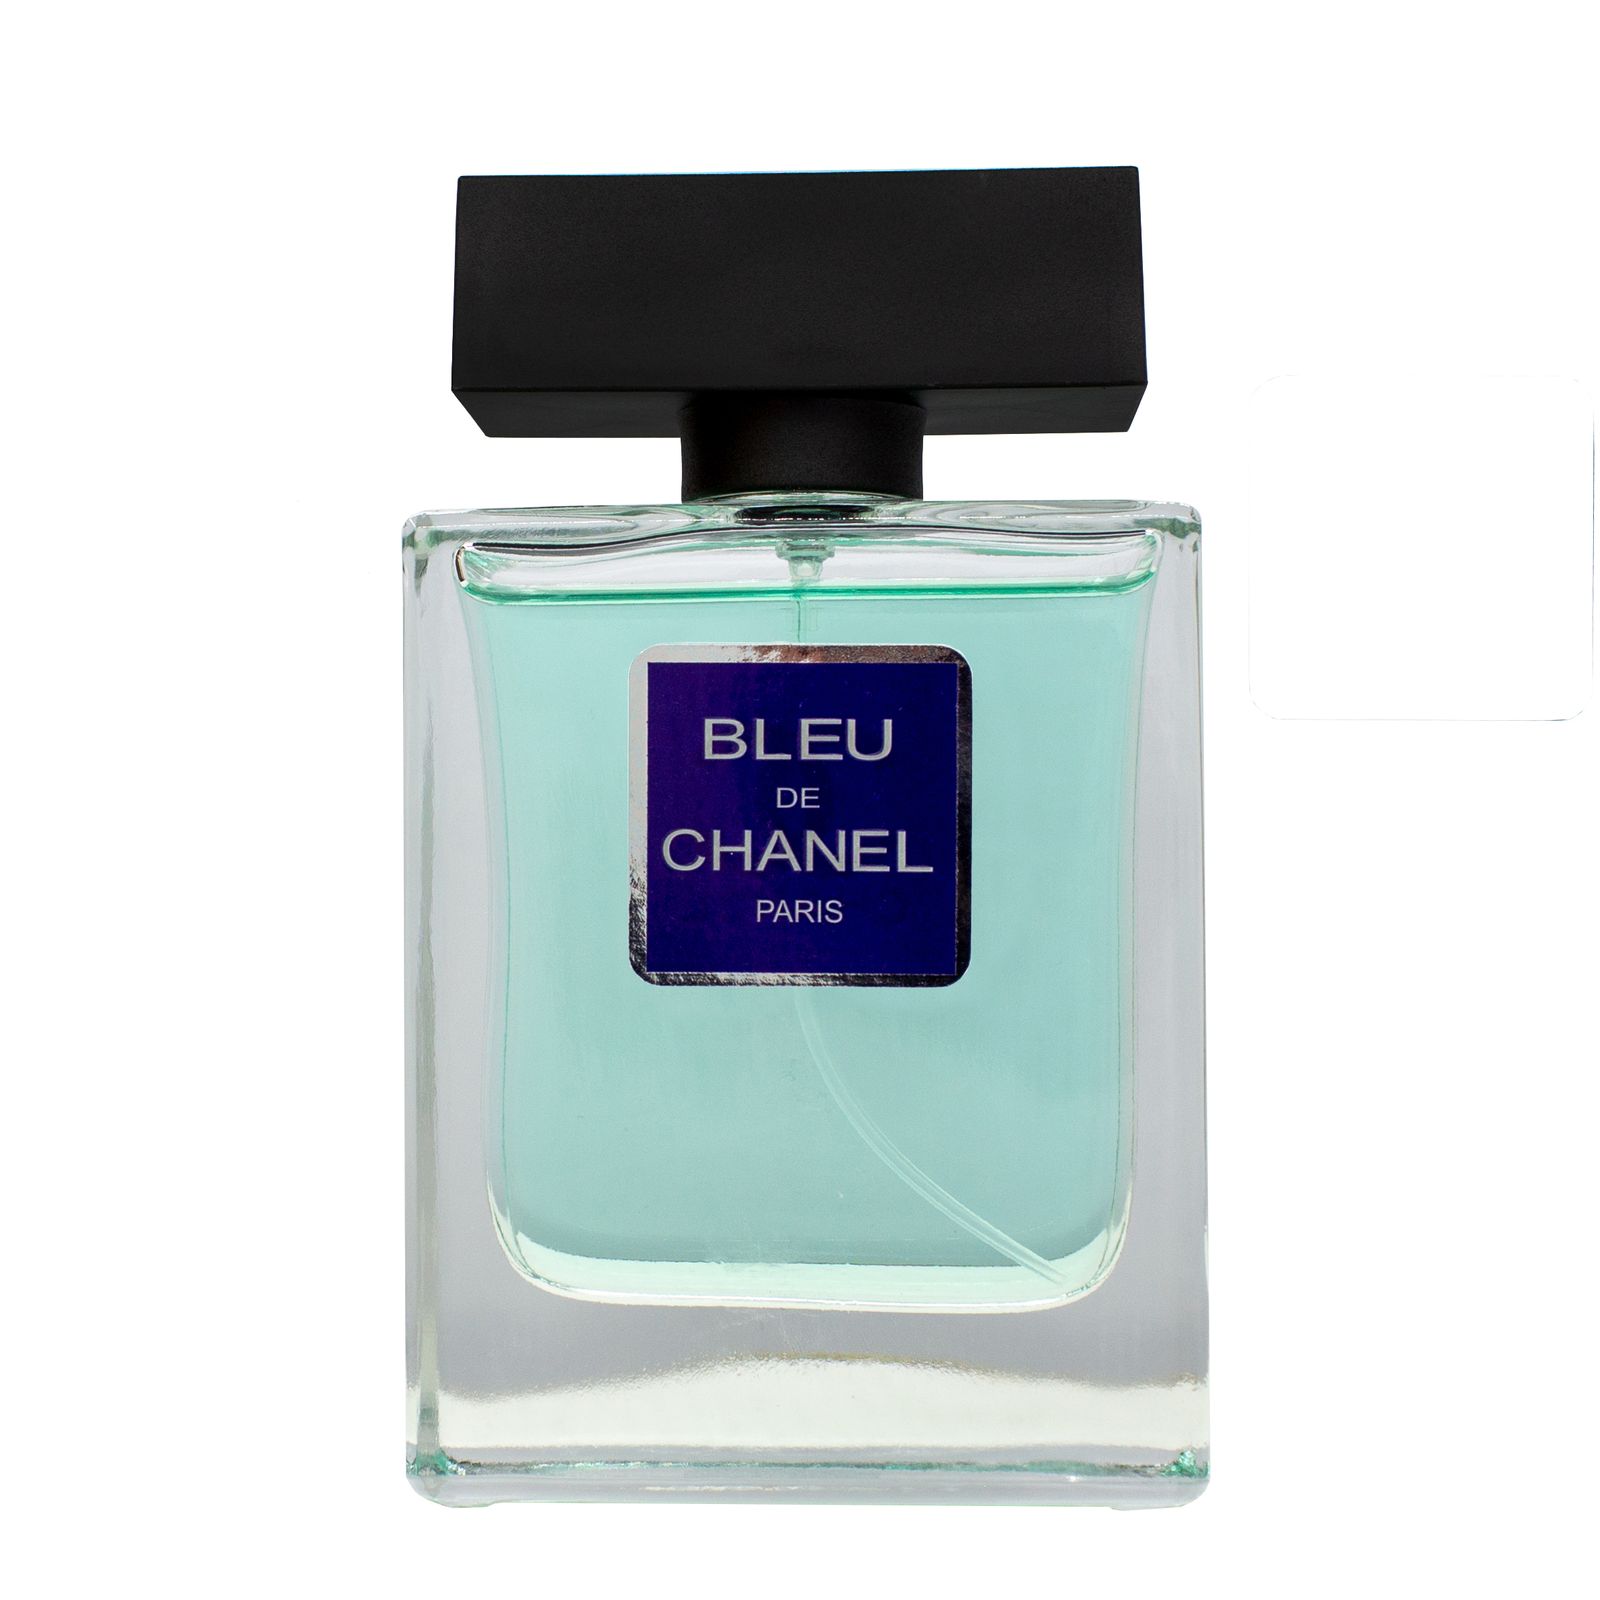 ادو پرفیوم مردانه پرستیژ مدل Bleu De Chanel  حجم 100 میلی لیتر -  - 1